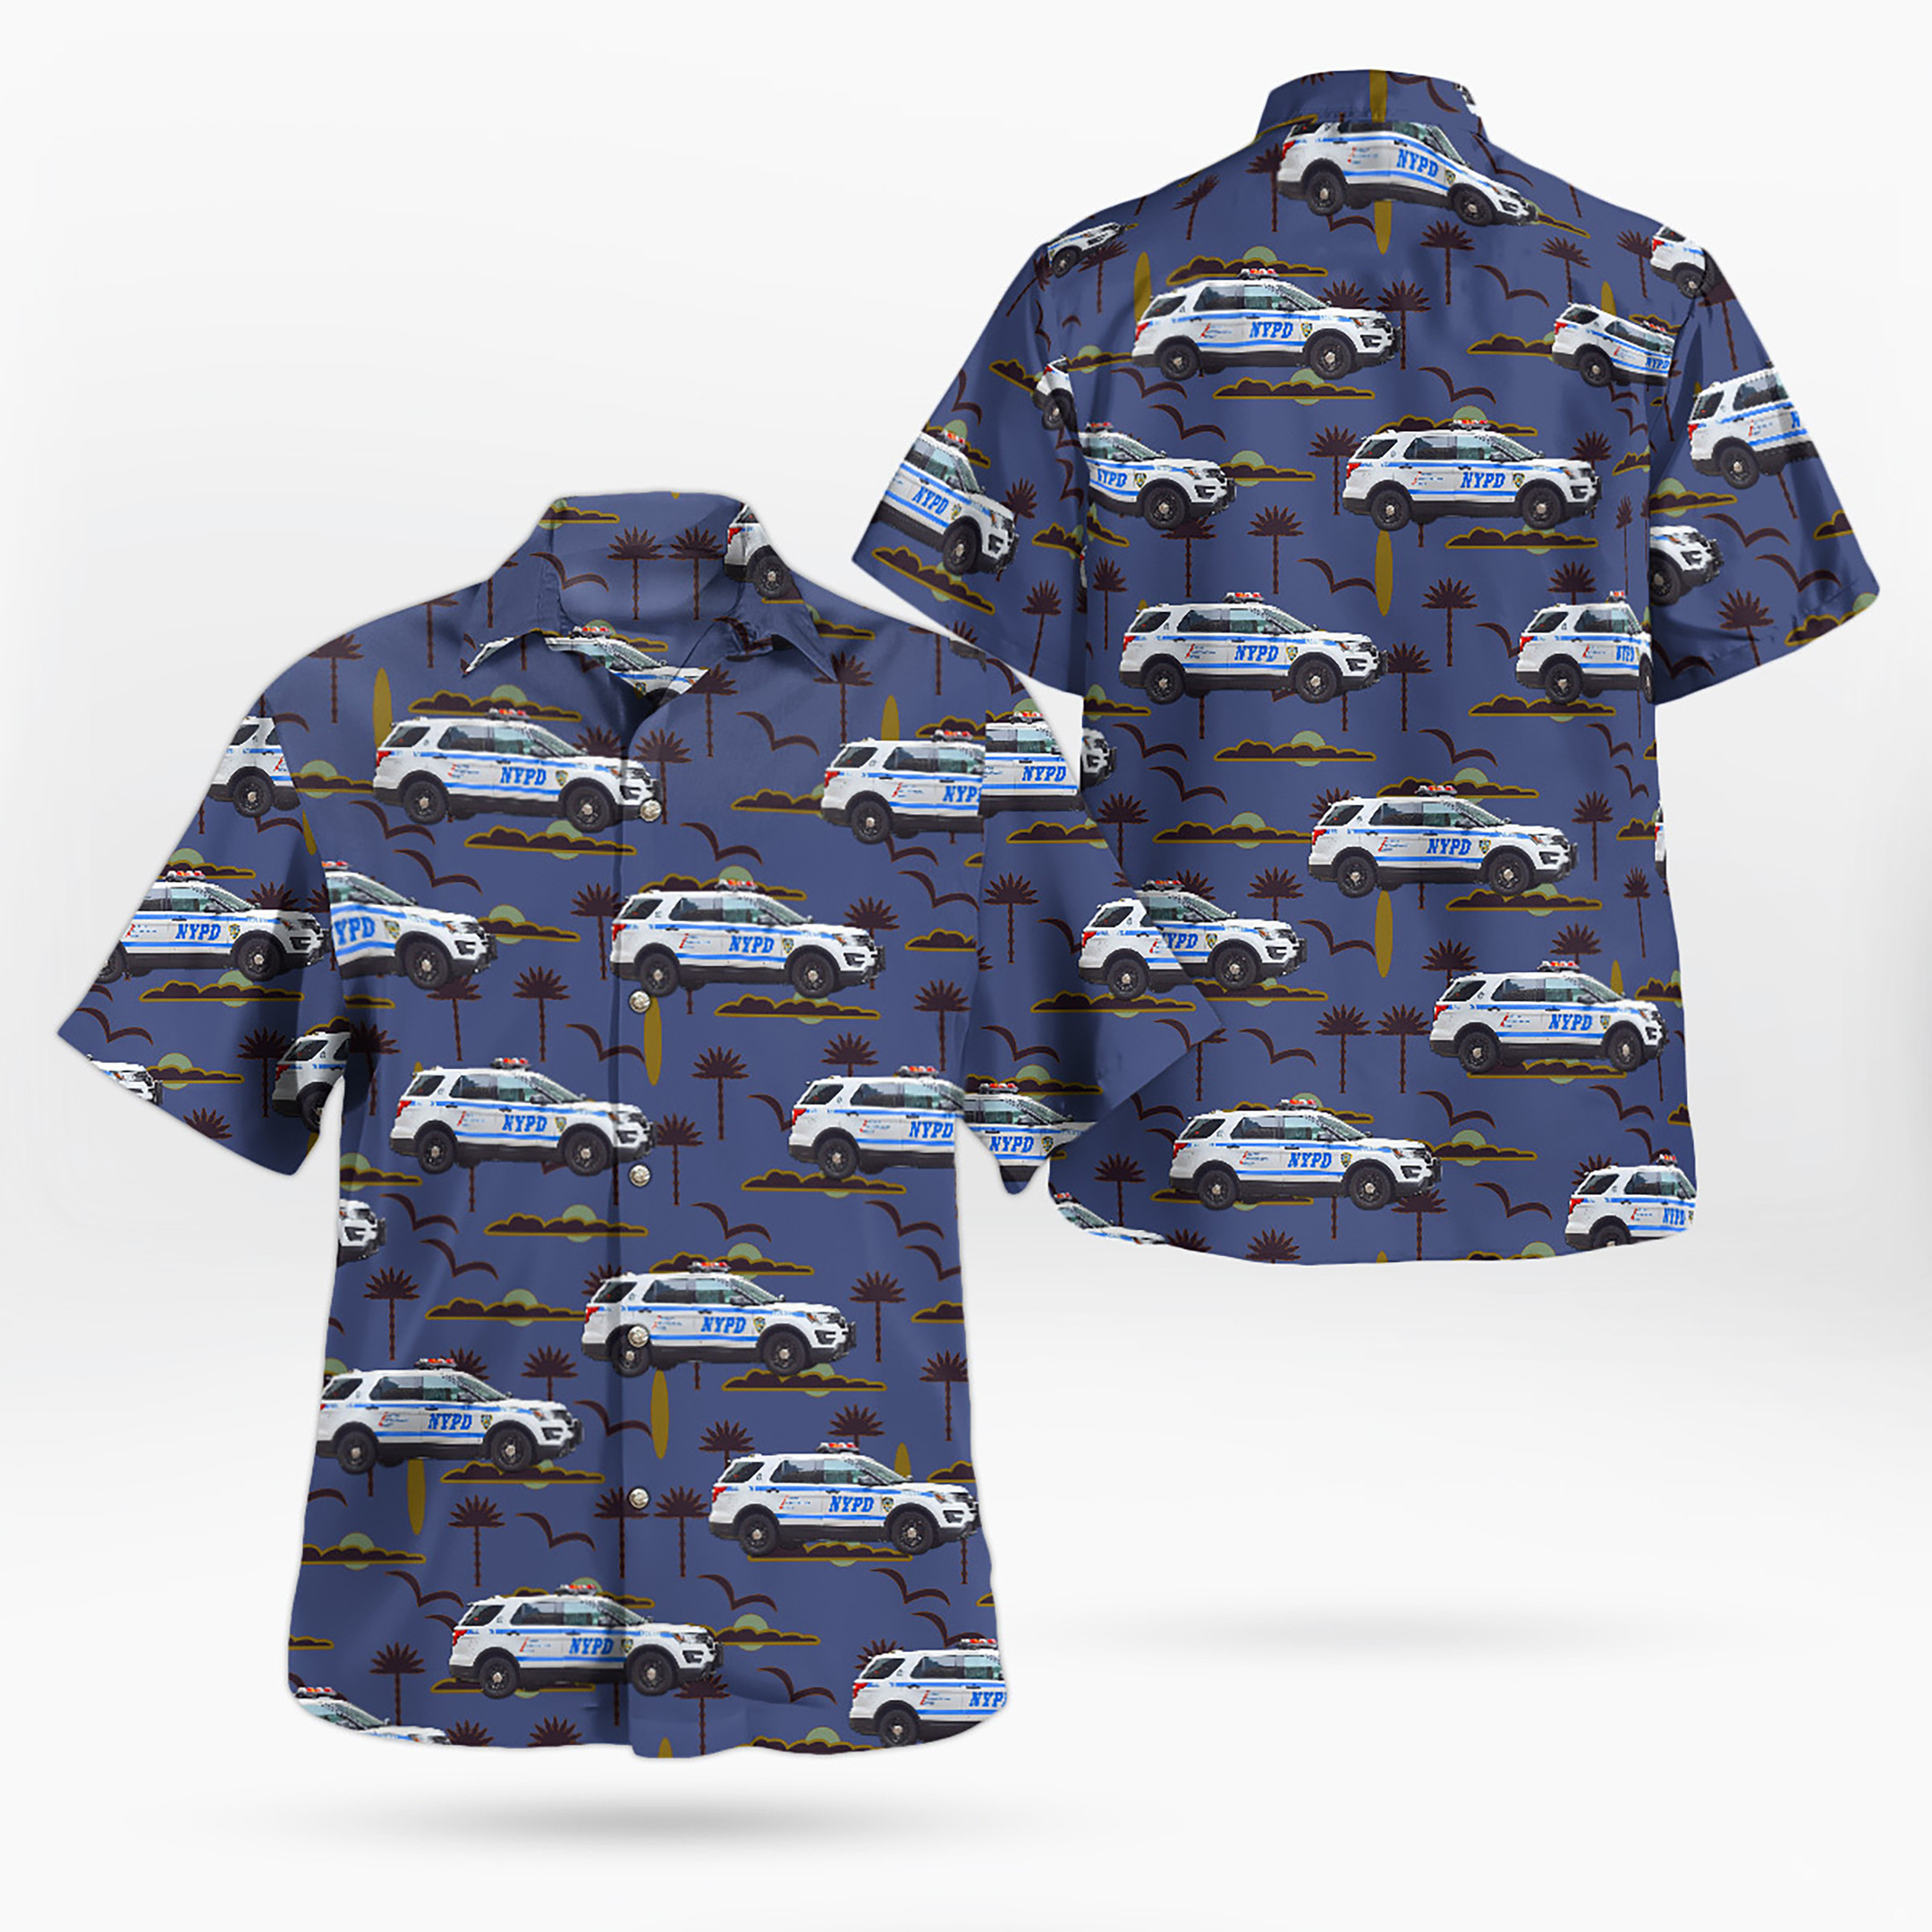 Get a new Hawaiian shirt to enjoy summer vacation 258